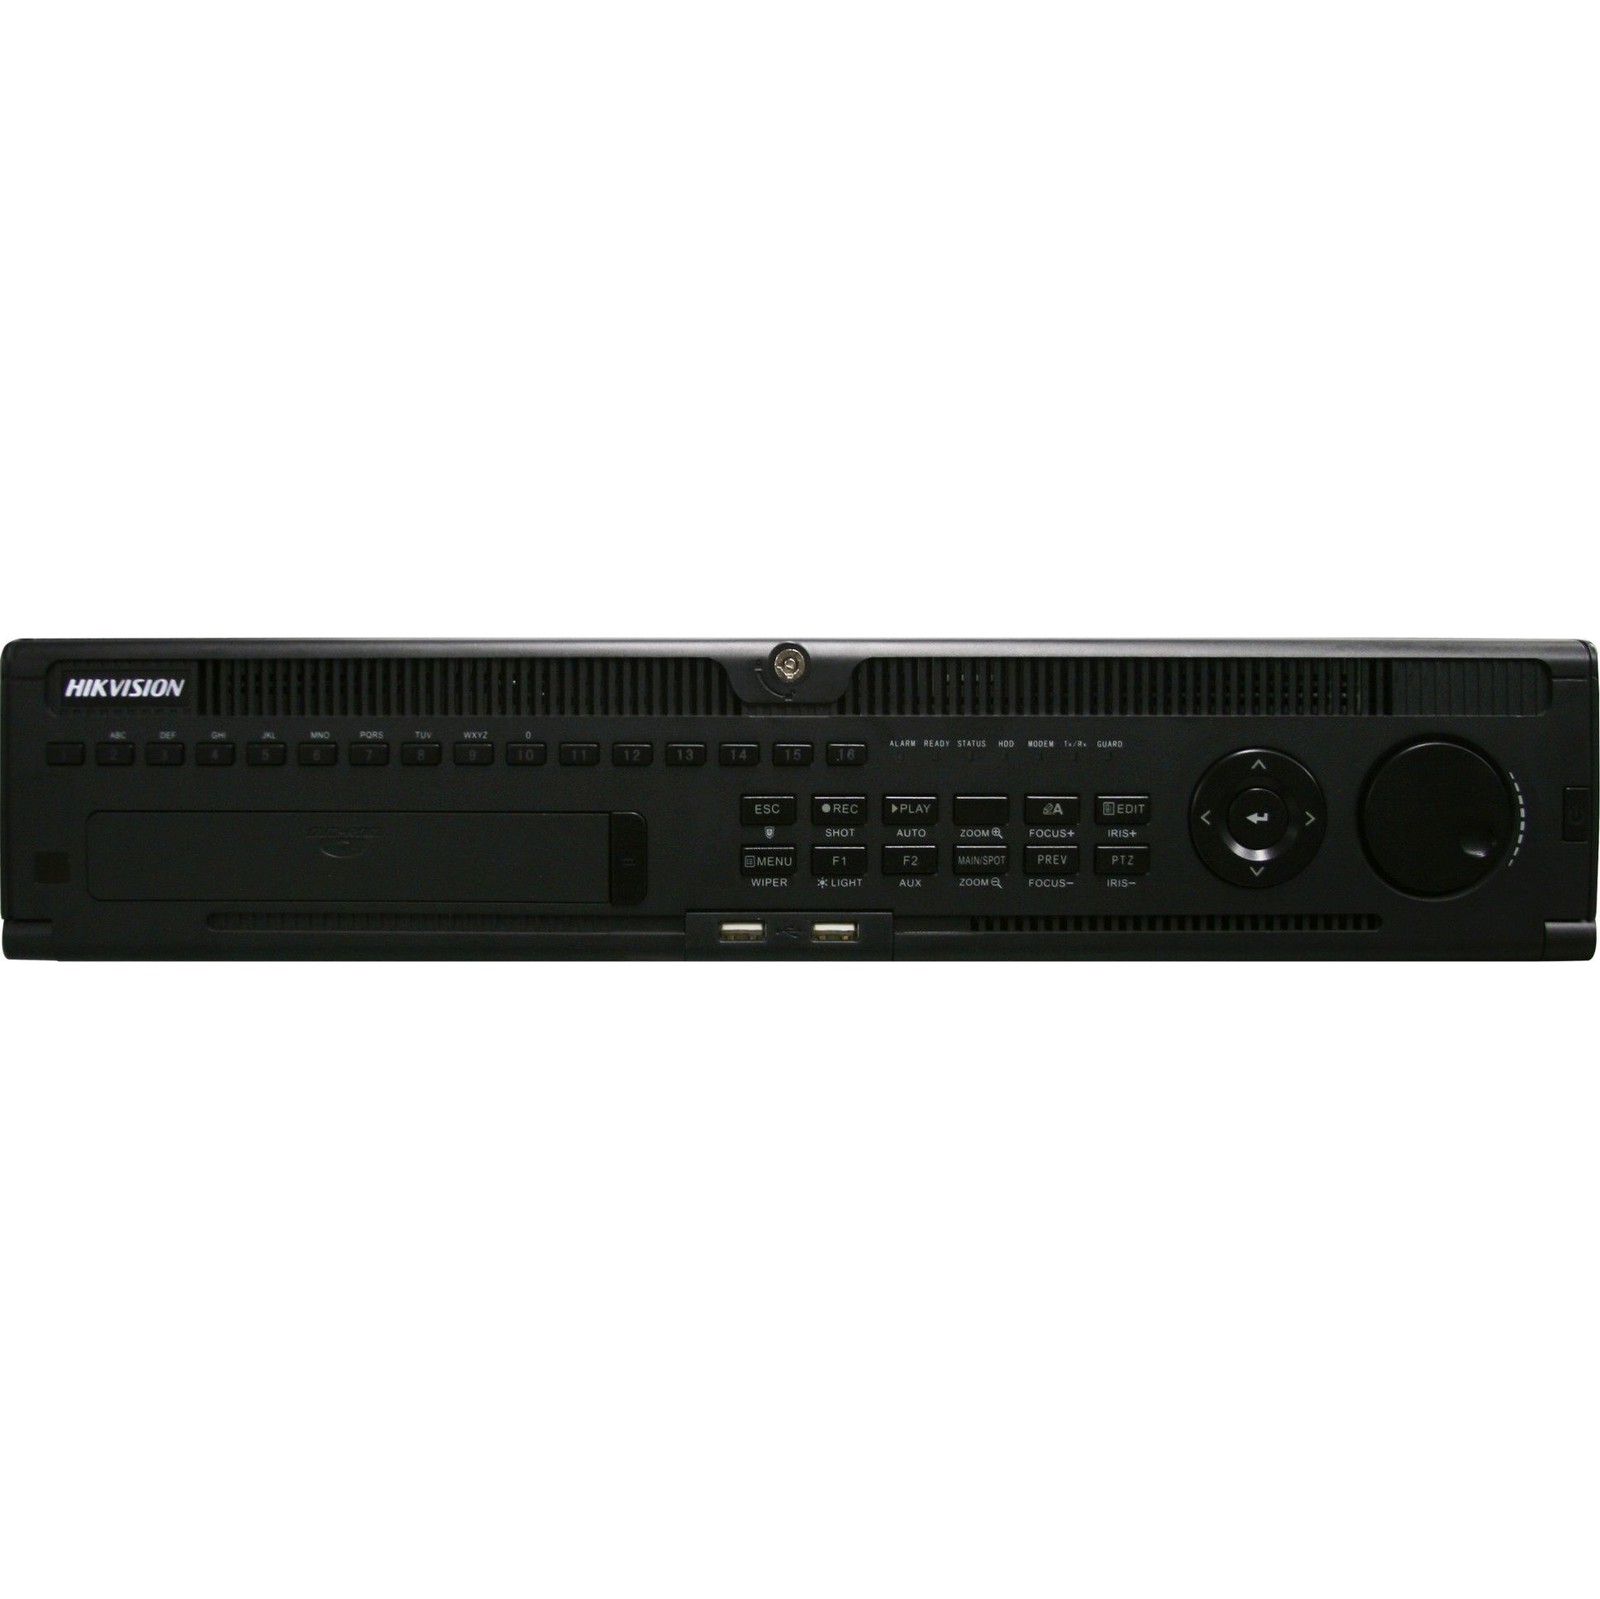 Hikvision DS-9632NI-I8 32-channel NVR